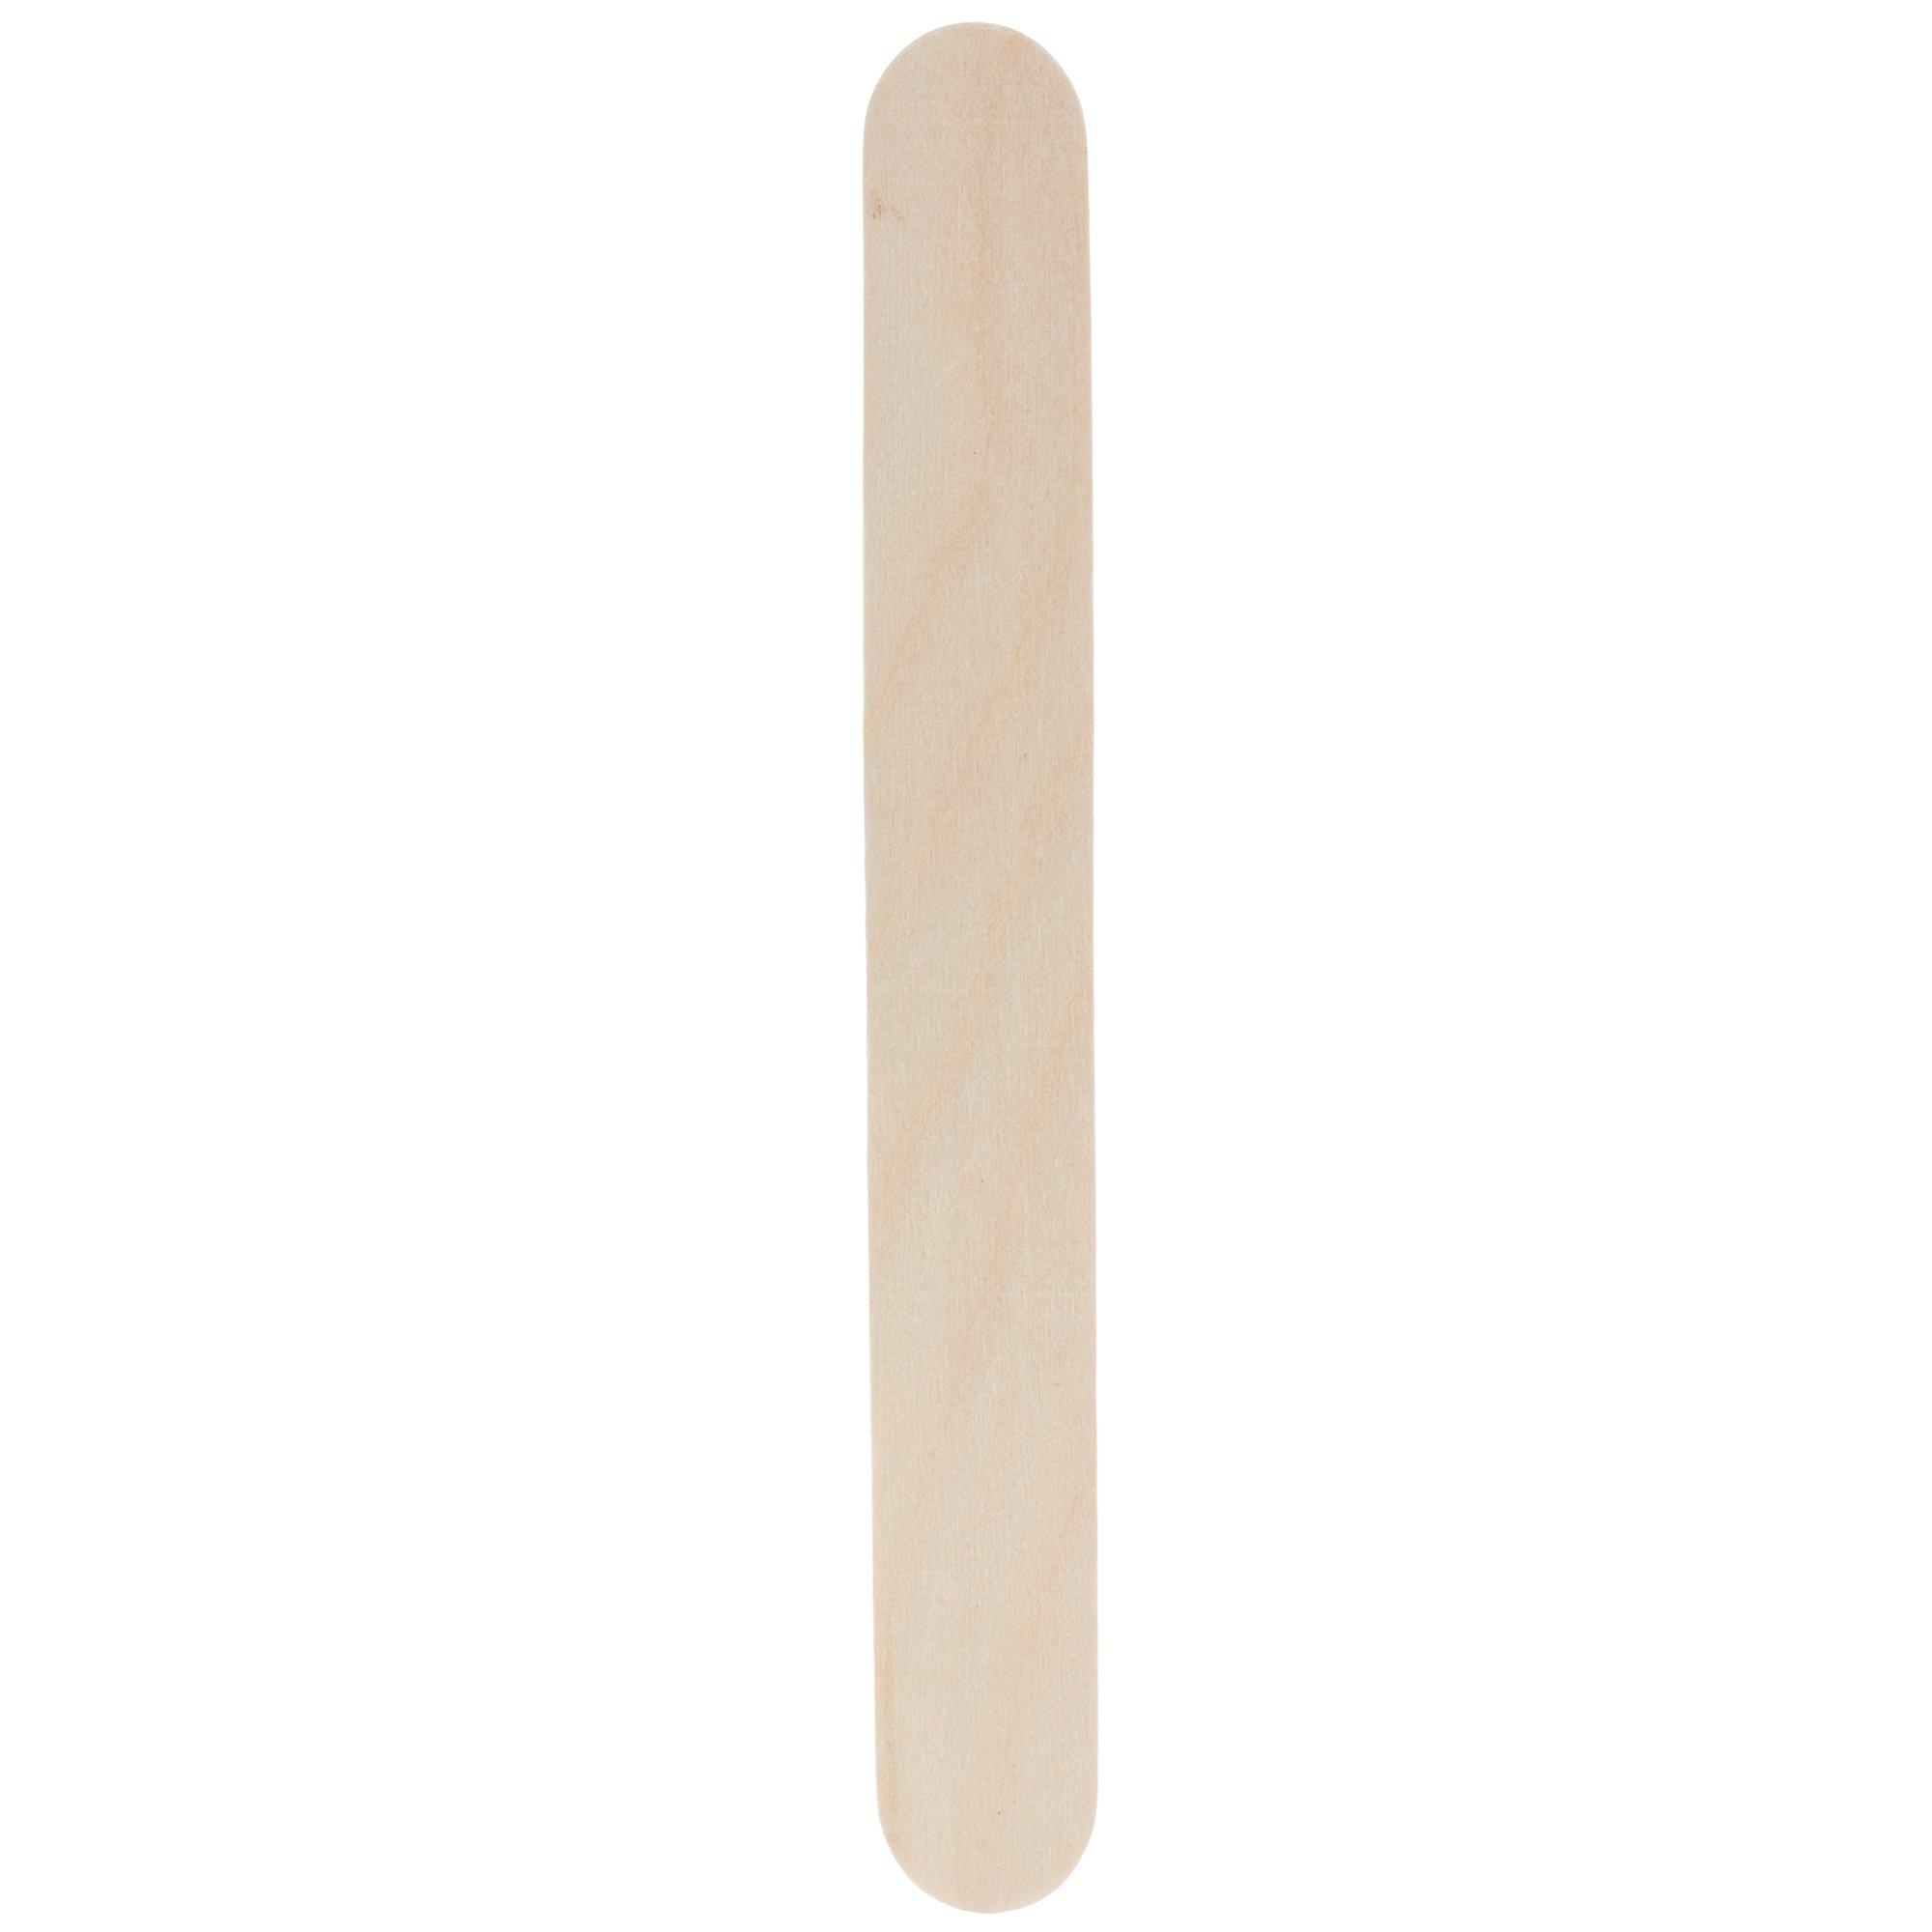 EBL Wood Craft Sticks Jumbo .75x6 3 packs of 75pc, 1 - Kroger